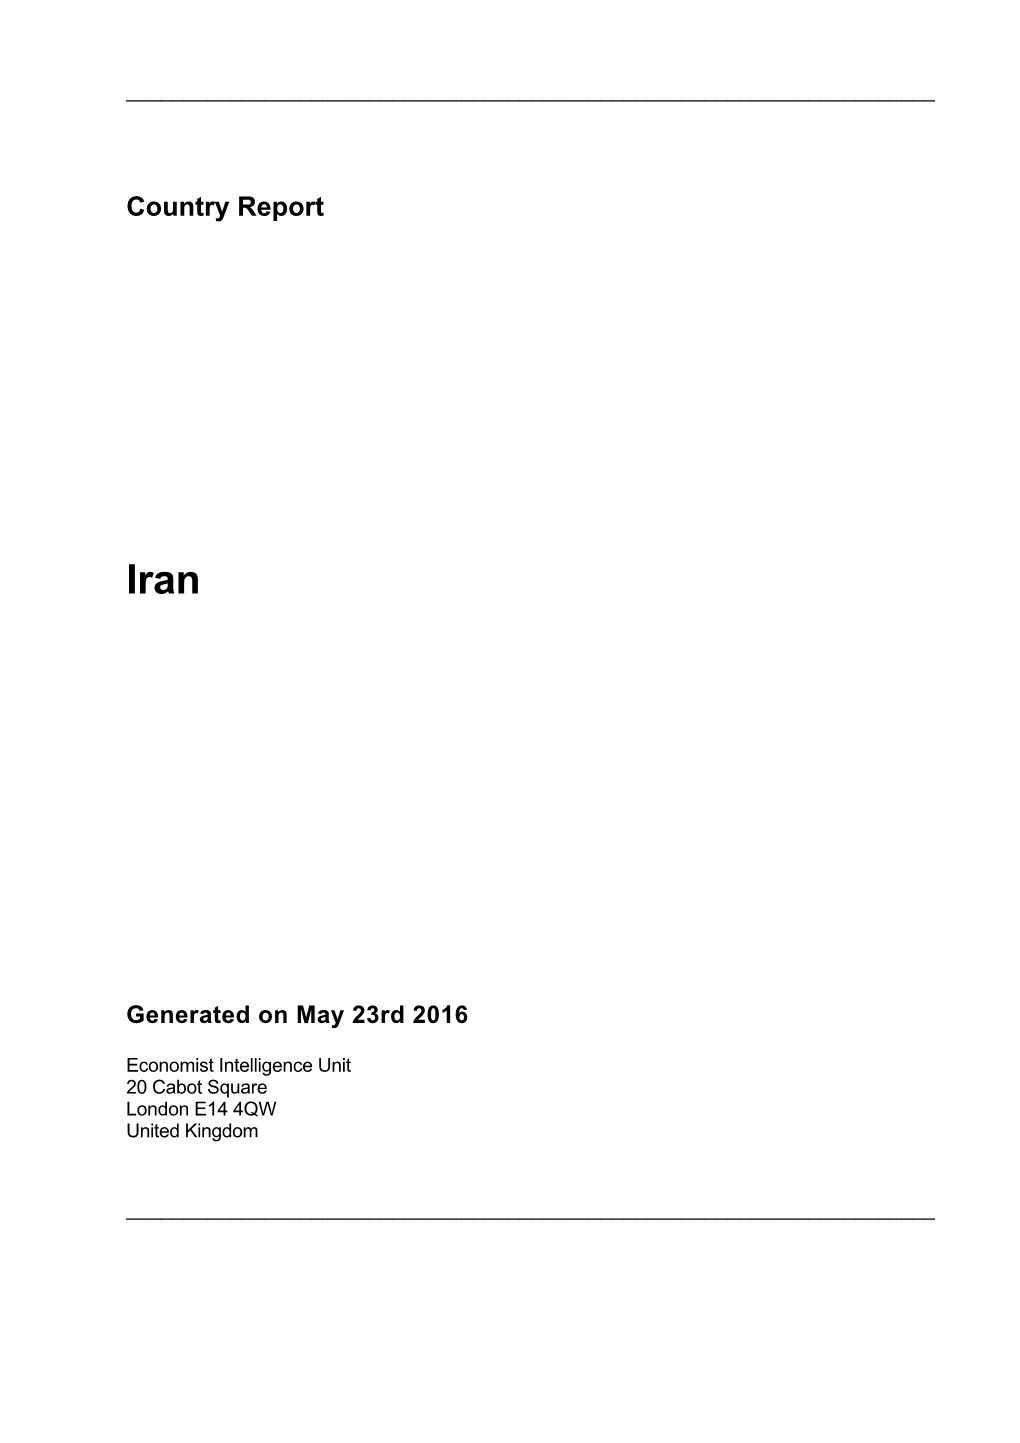 Country Report Iran May 2016